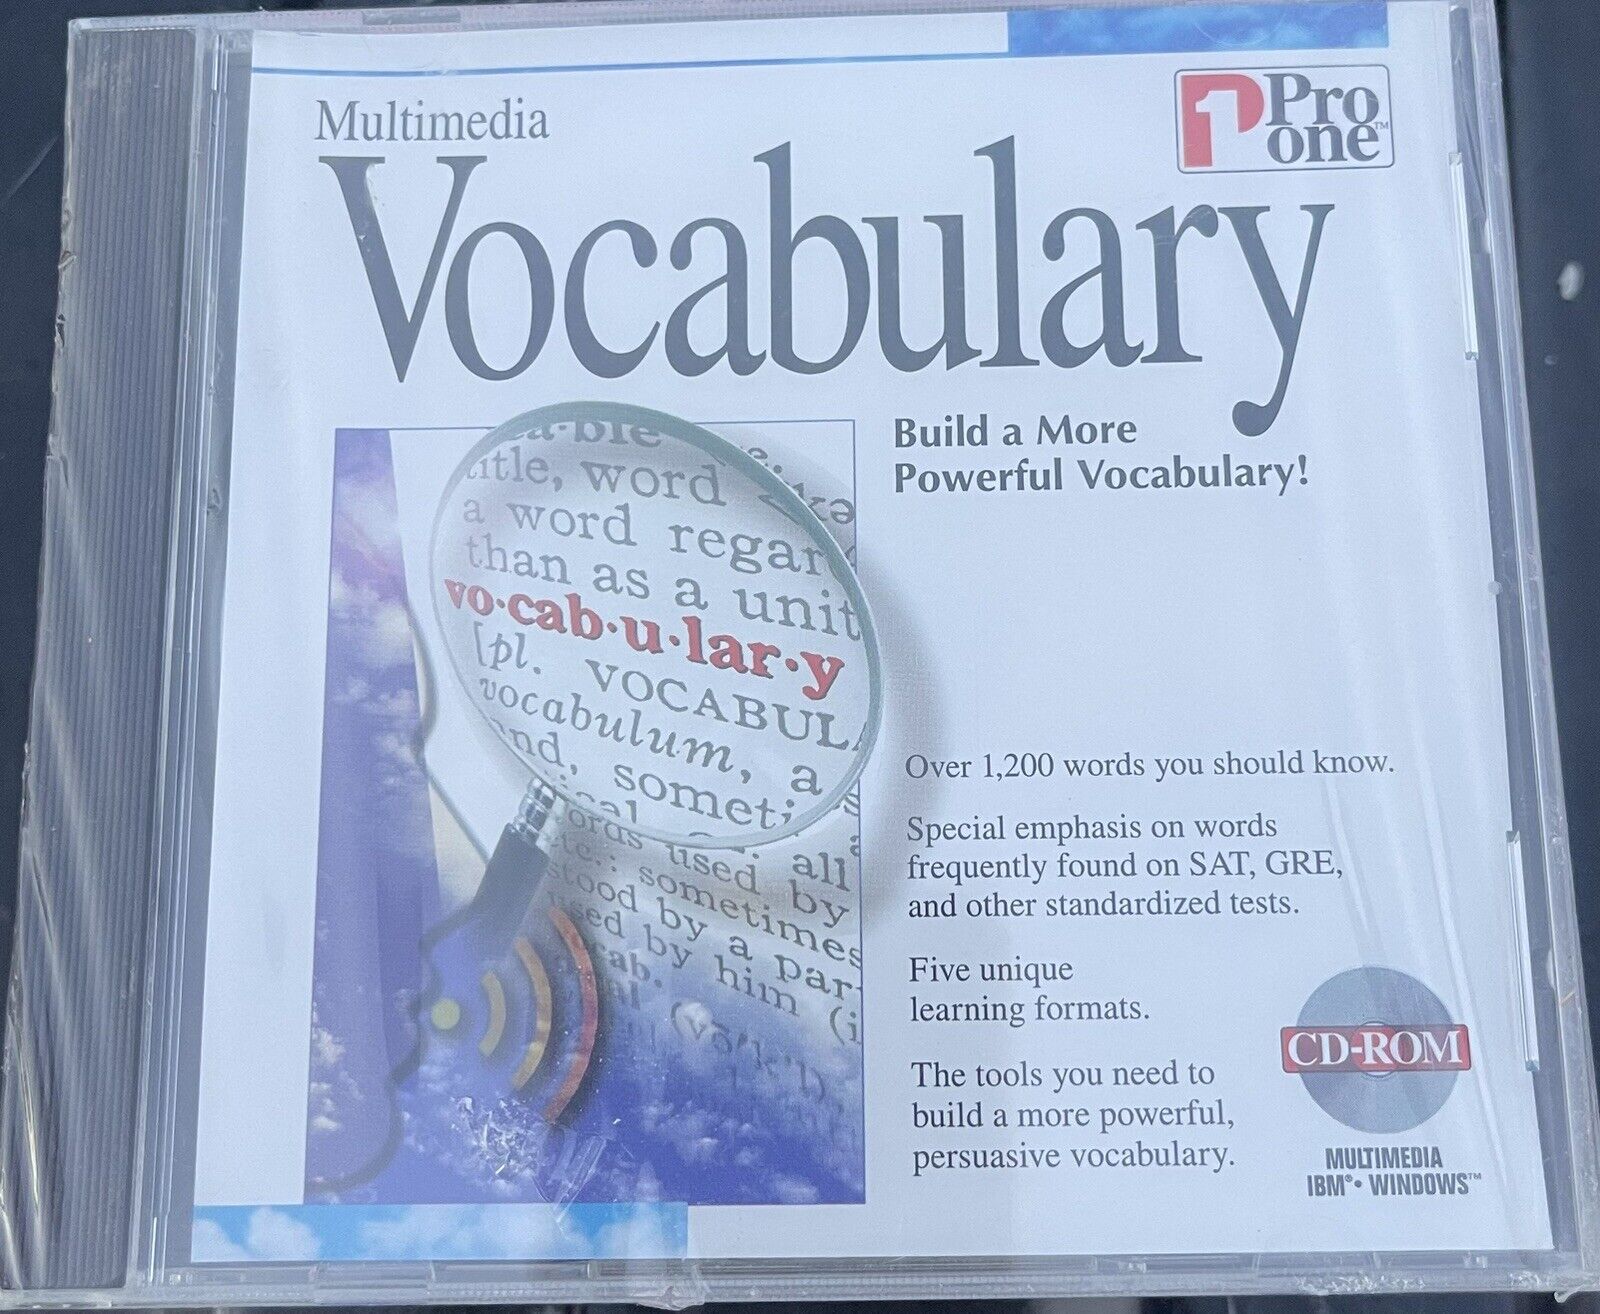 Pro One Multimedia Vocabulary 1996 CD-Rom 